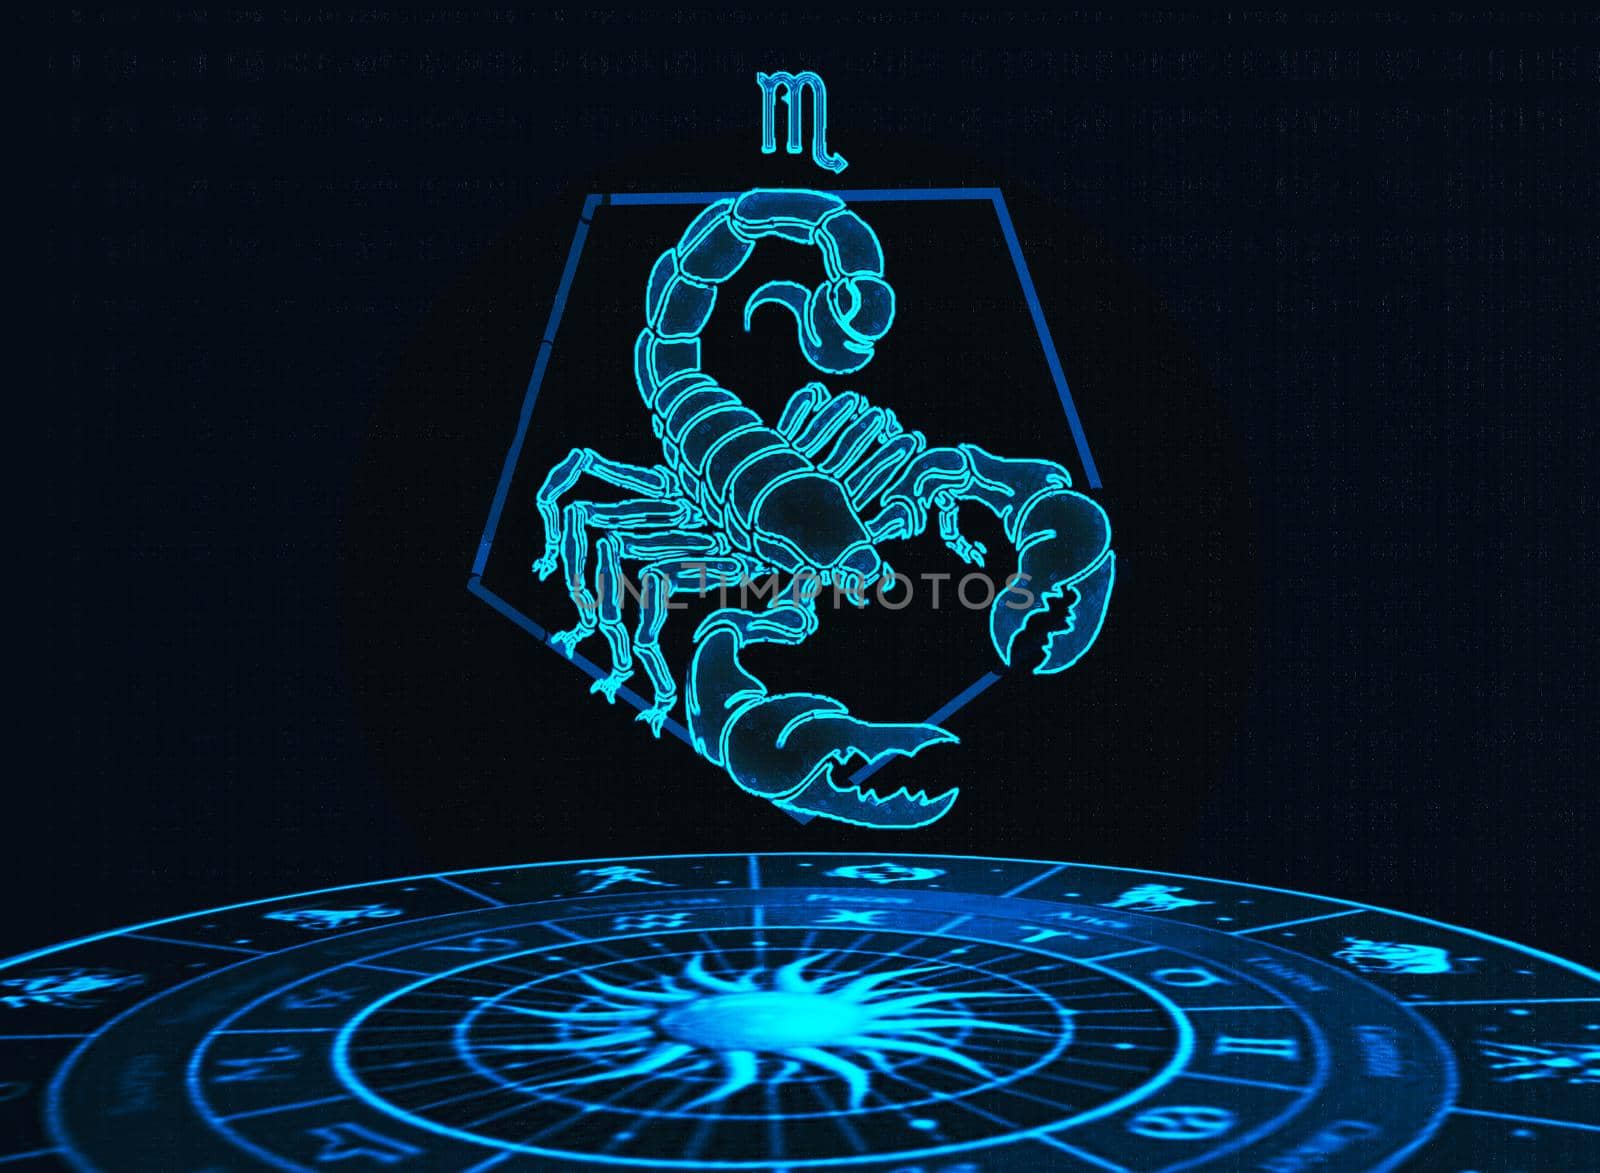 Scorpion Scorpio zodia by suththisumdeang